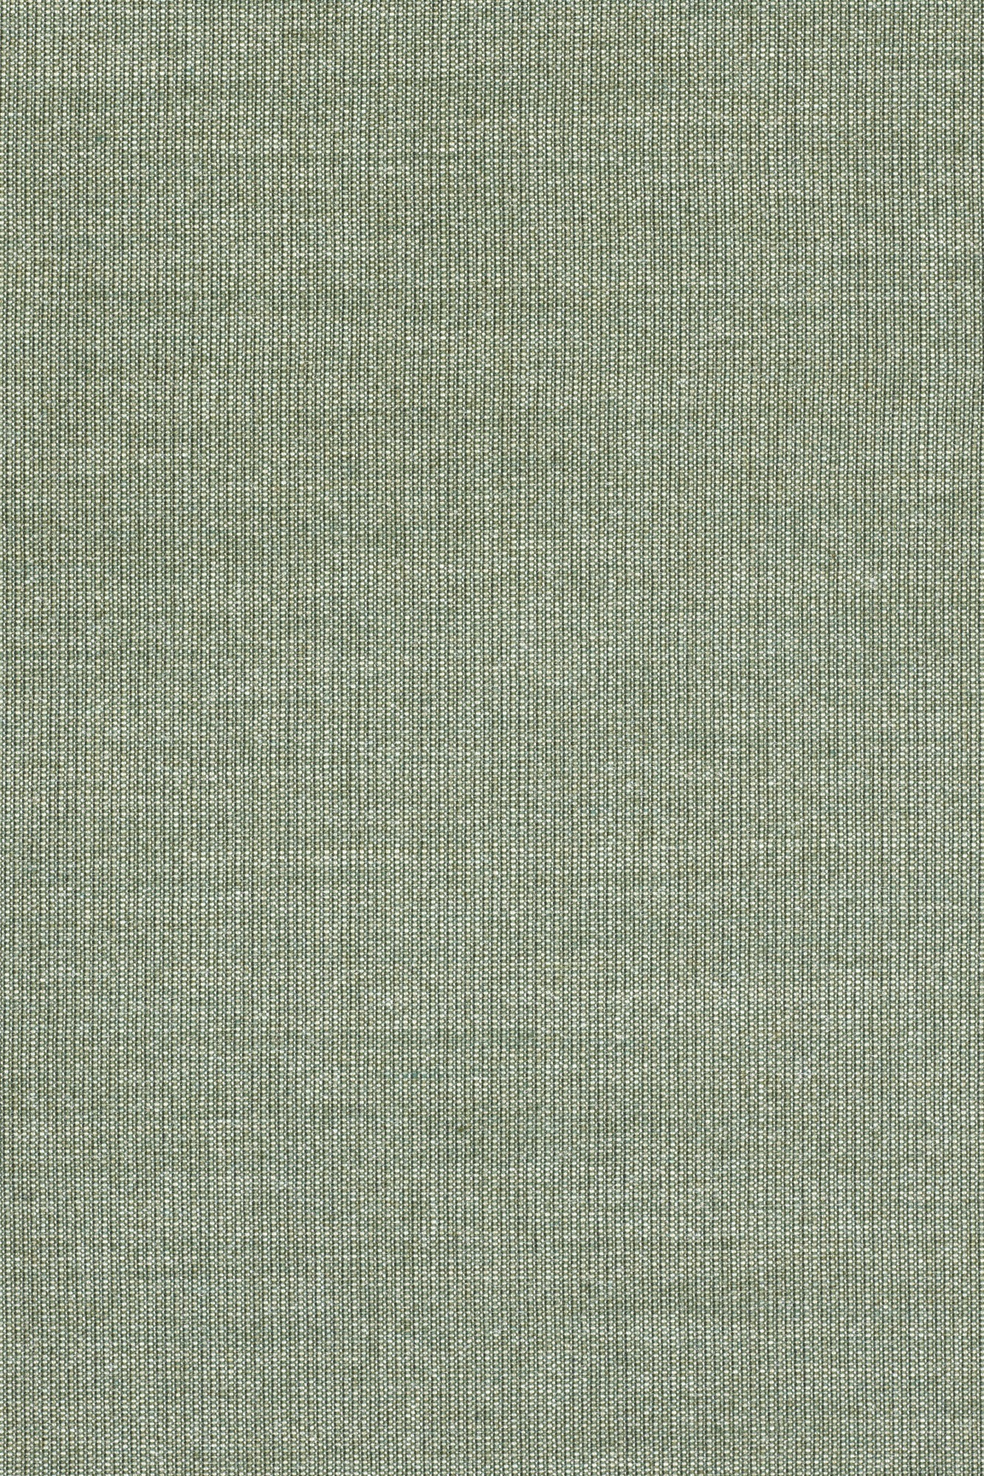 Fabric sample Canvas 2 926 green